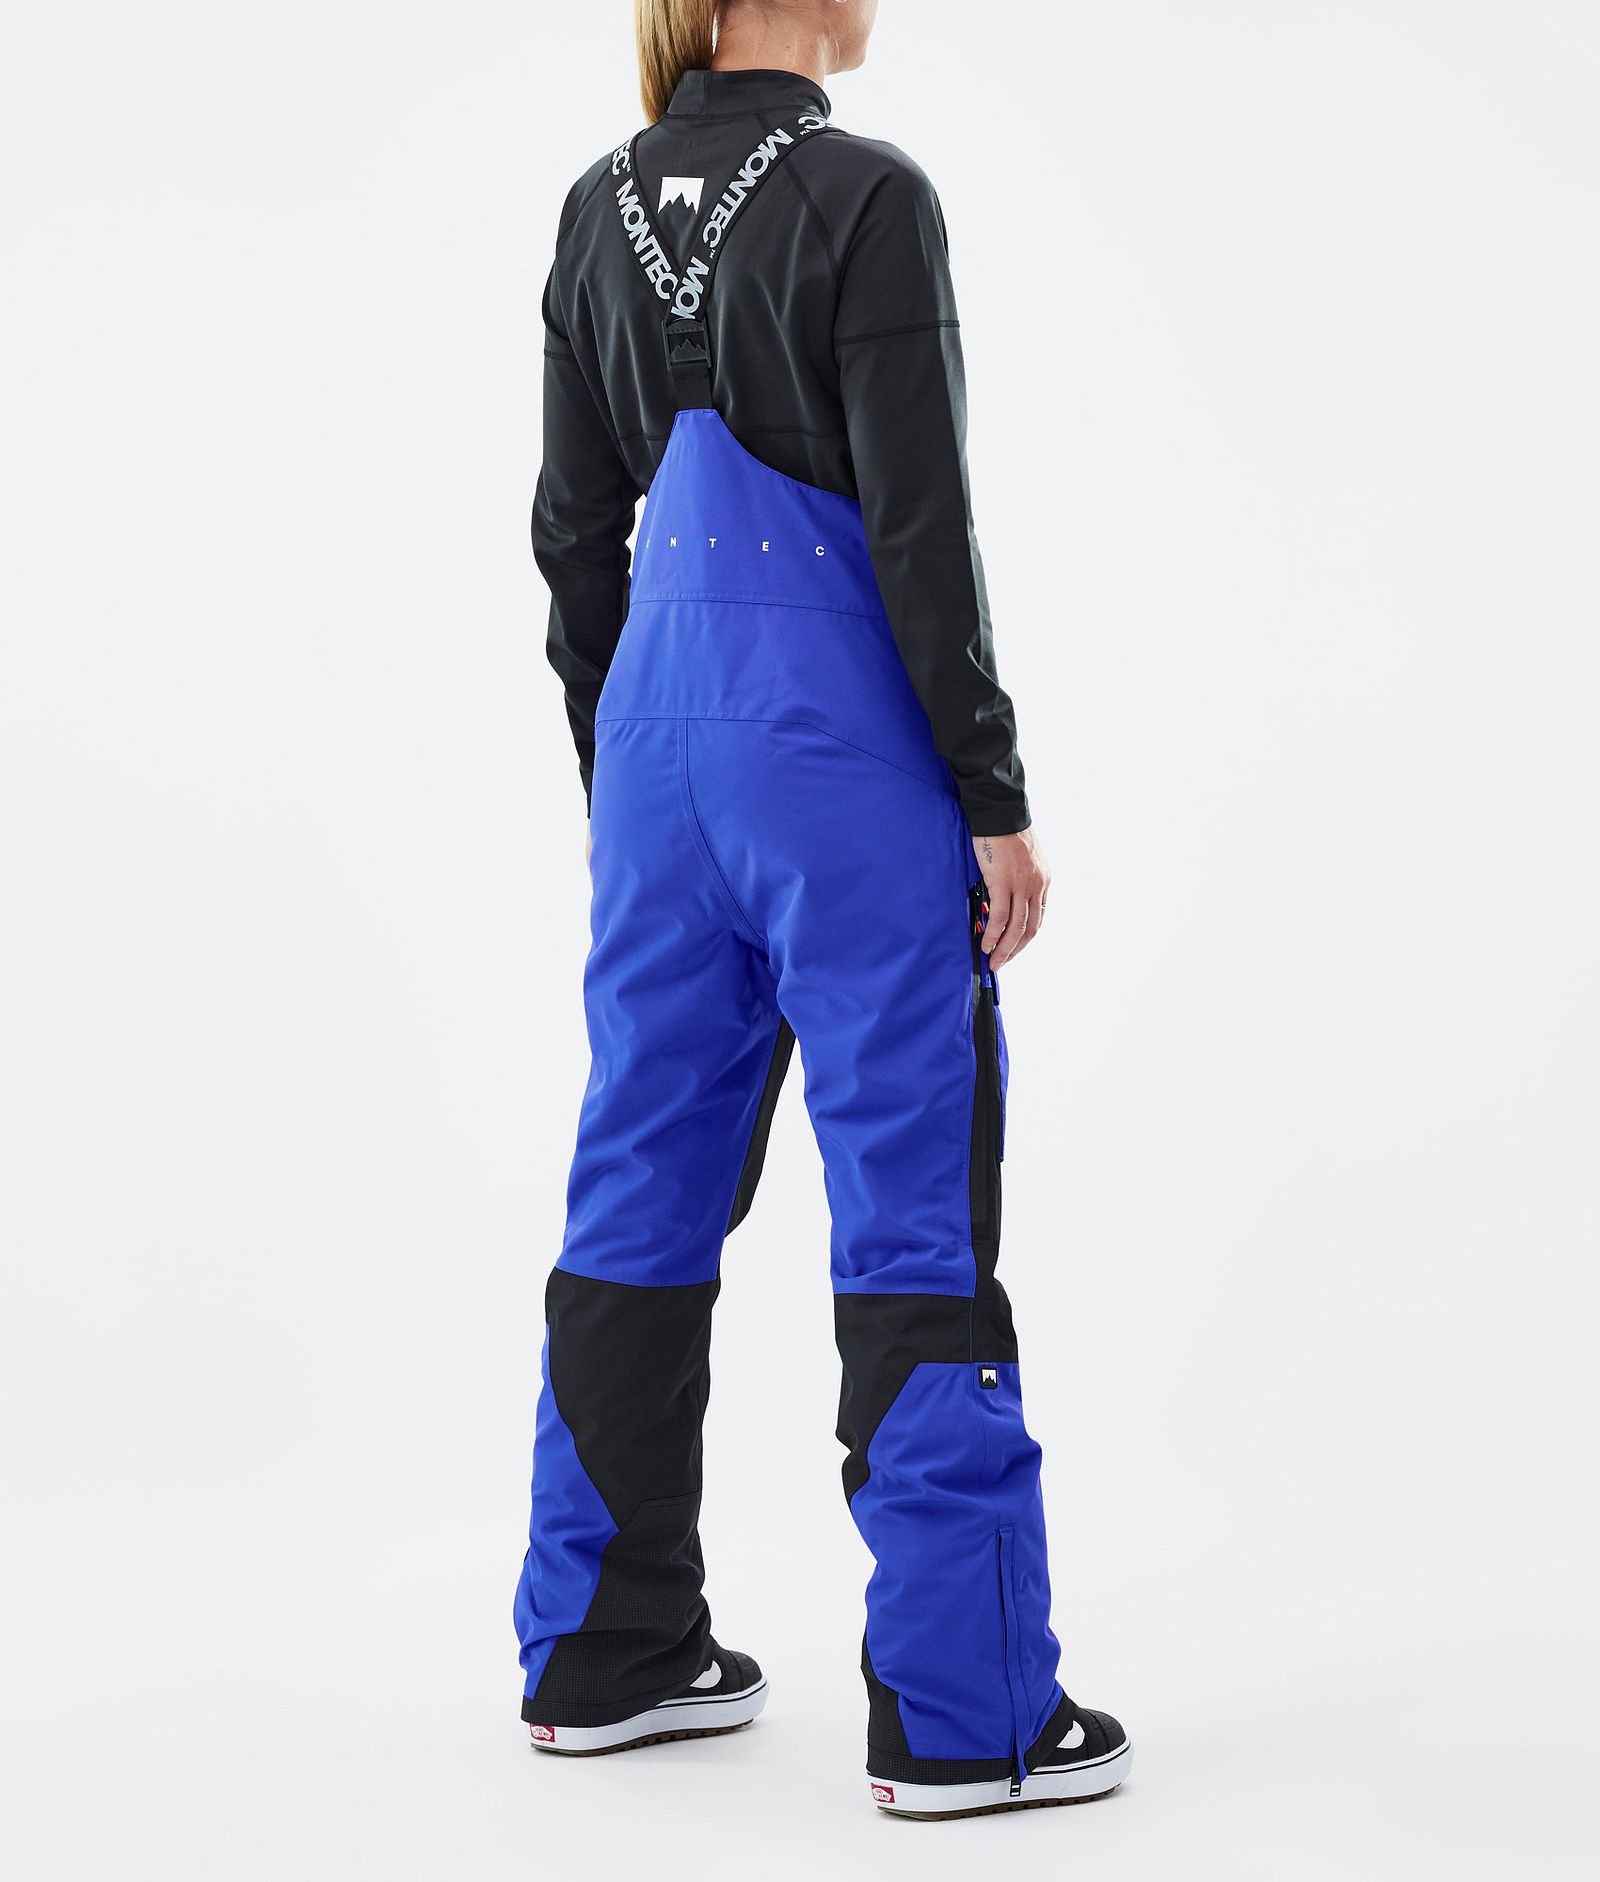 Montec Fawk W Pantalon de Snowboard Femme Cobalt Blue/Black Renewed